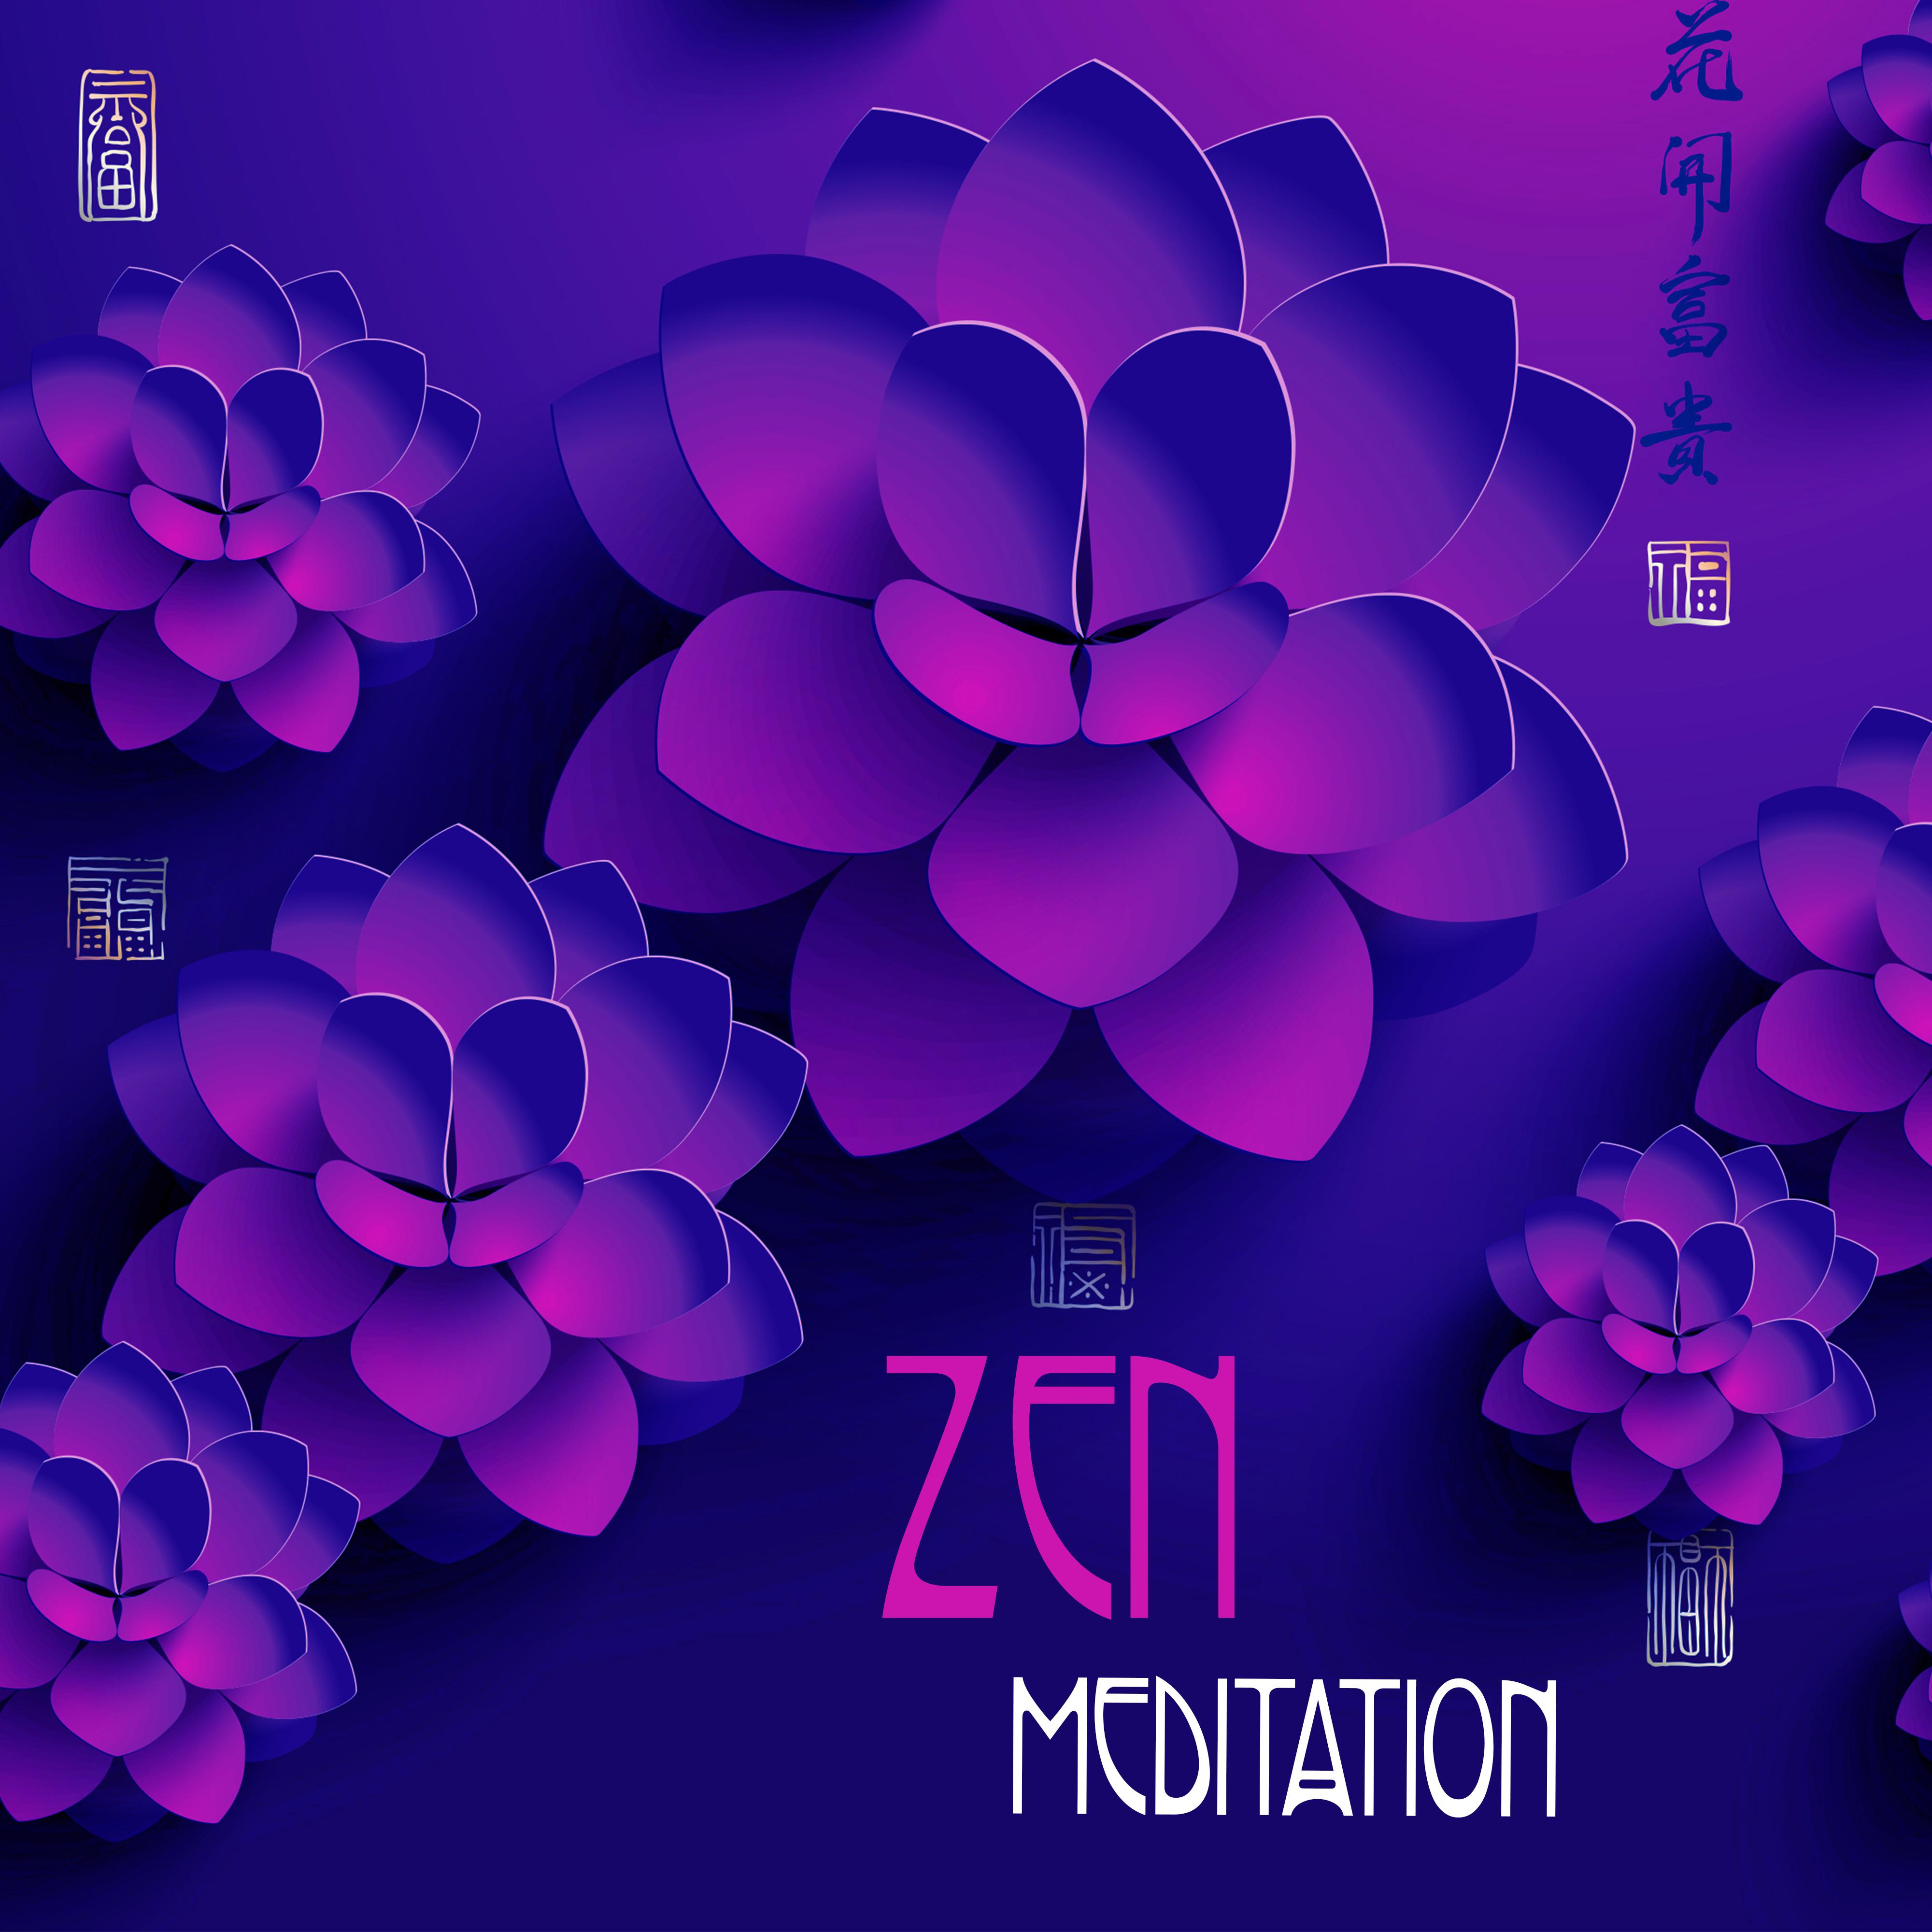 Zen Meditation – Sounds of Yoga, Peaceful Mind, Meditate, Relax with Nature Sounds, Spirituality, Buddha Lounge, Reiki Music, Yoga Meditation